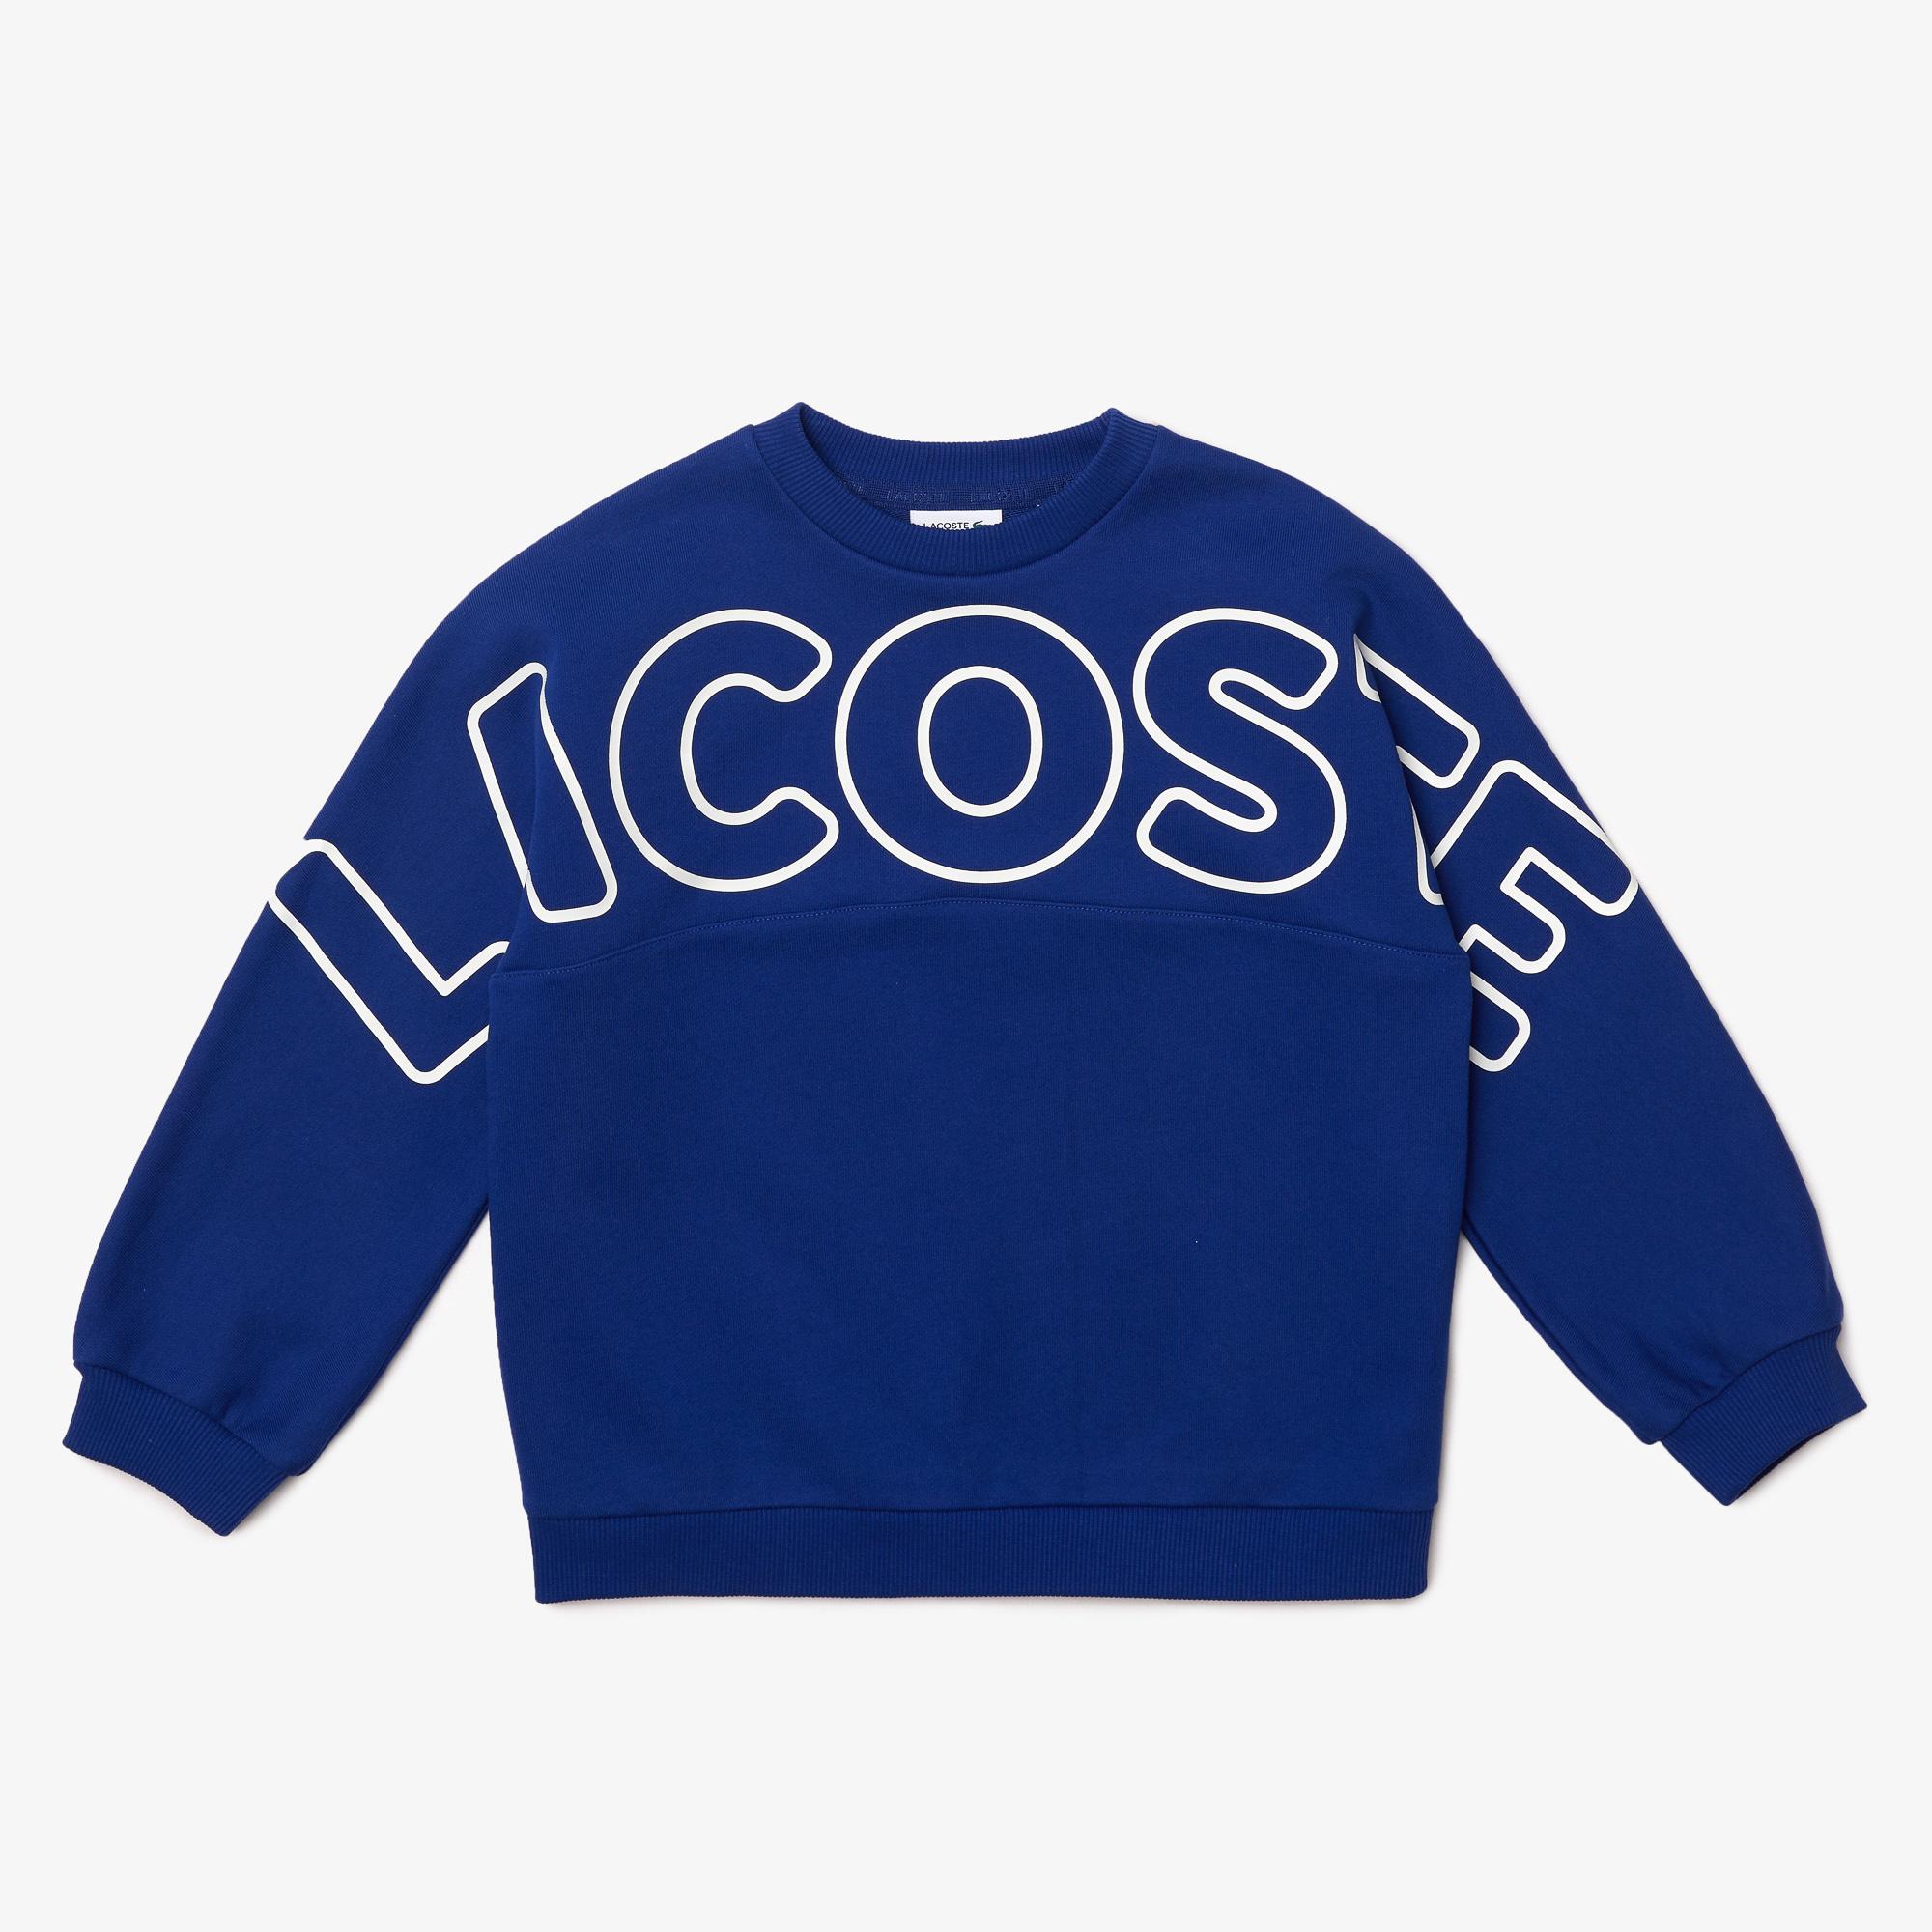 Boys’ Lacoste Lettered Fleece Sweatshirt